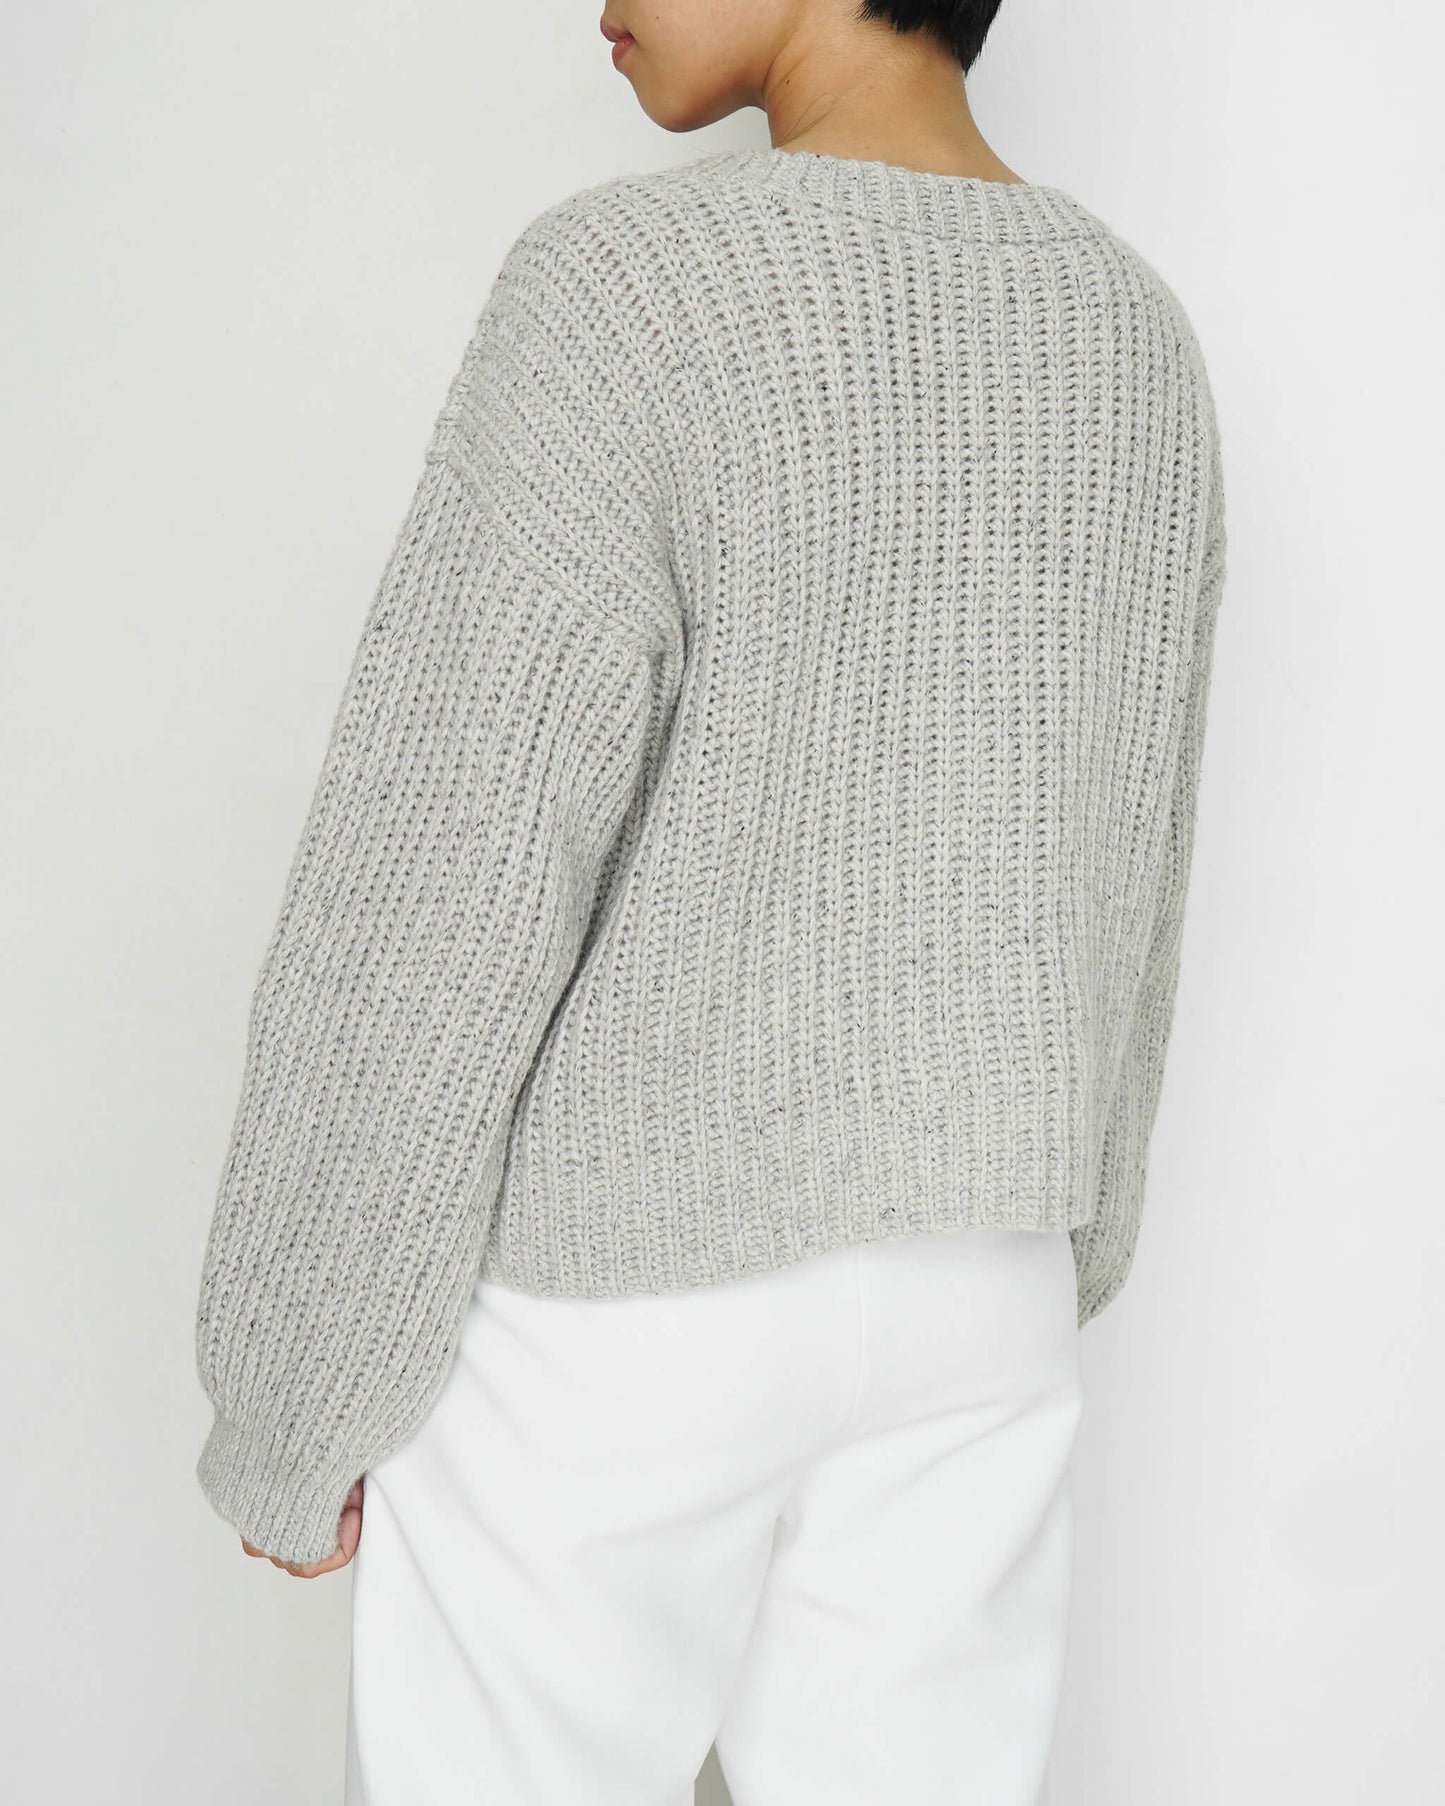 Sweater No.41 | Ribbed sweater crochet pattern